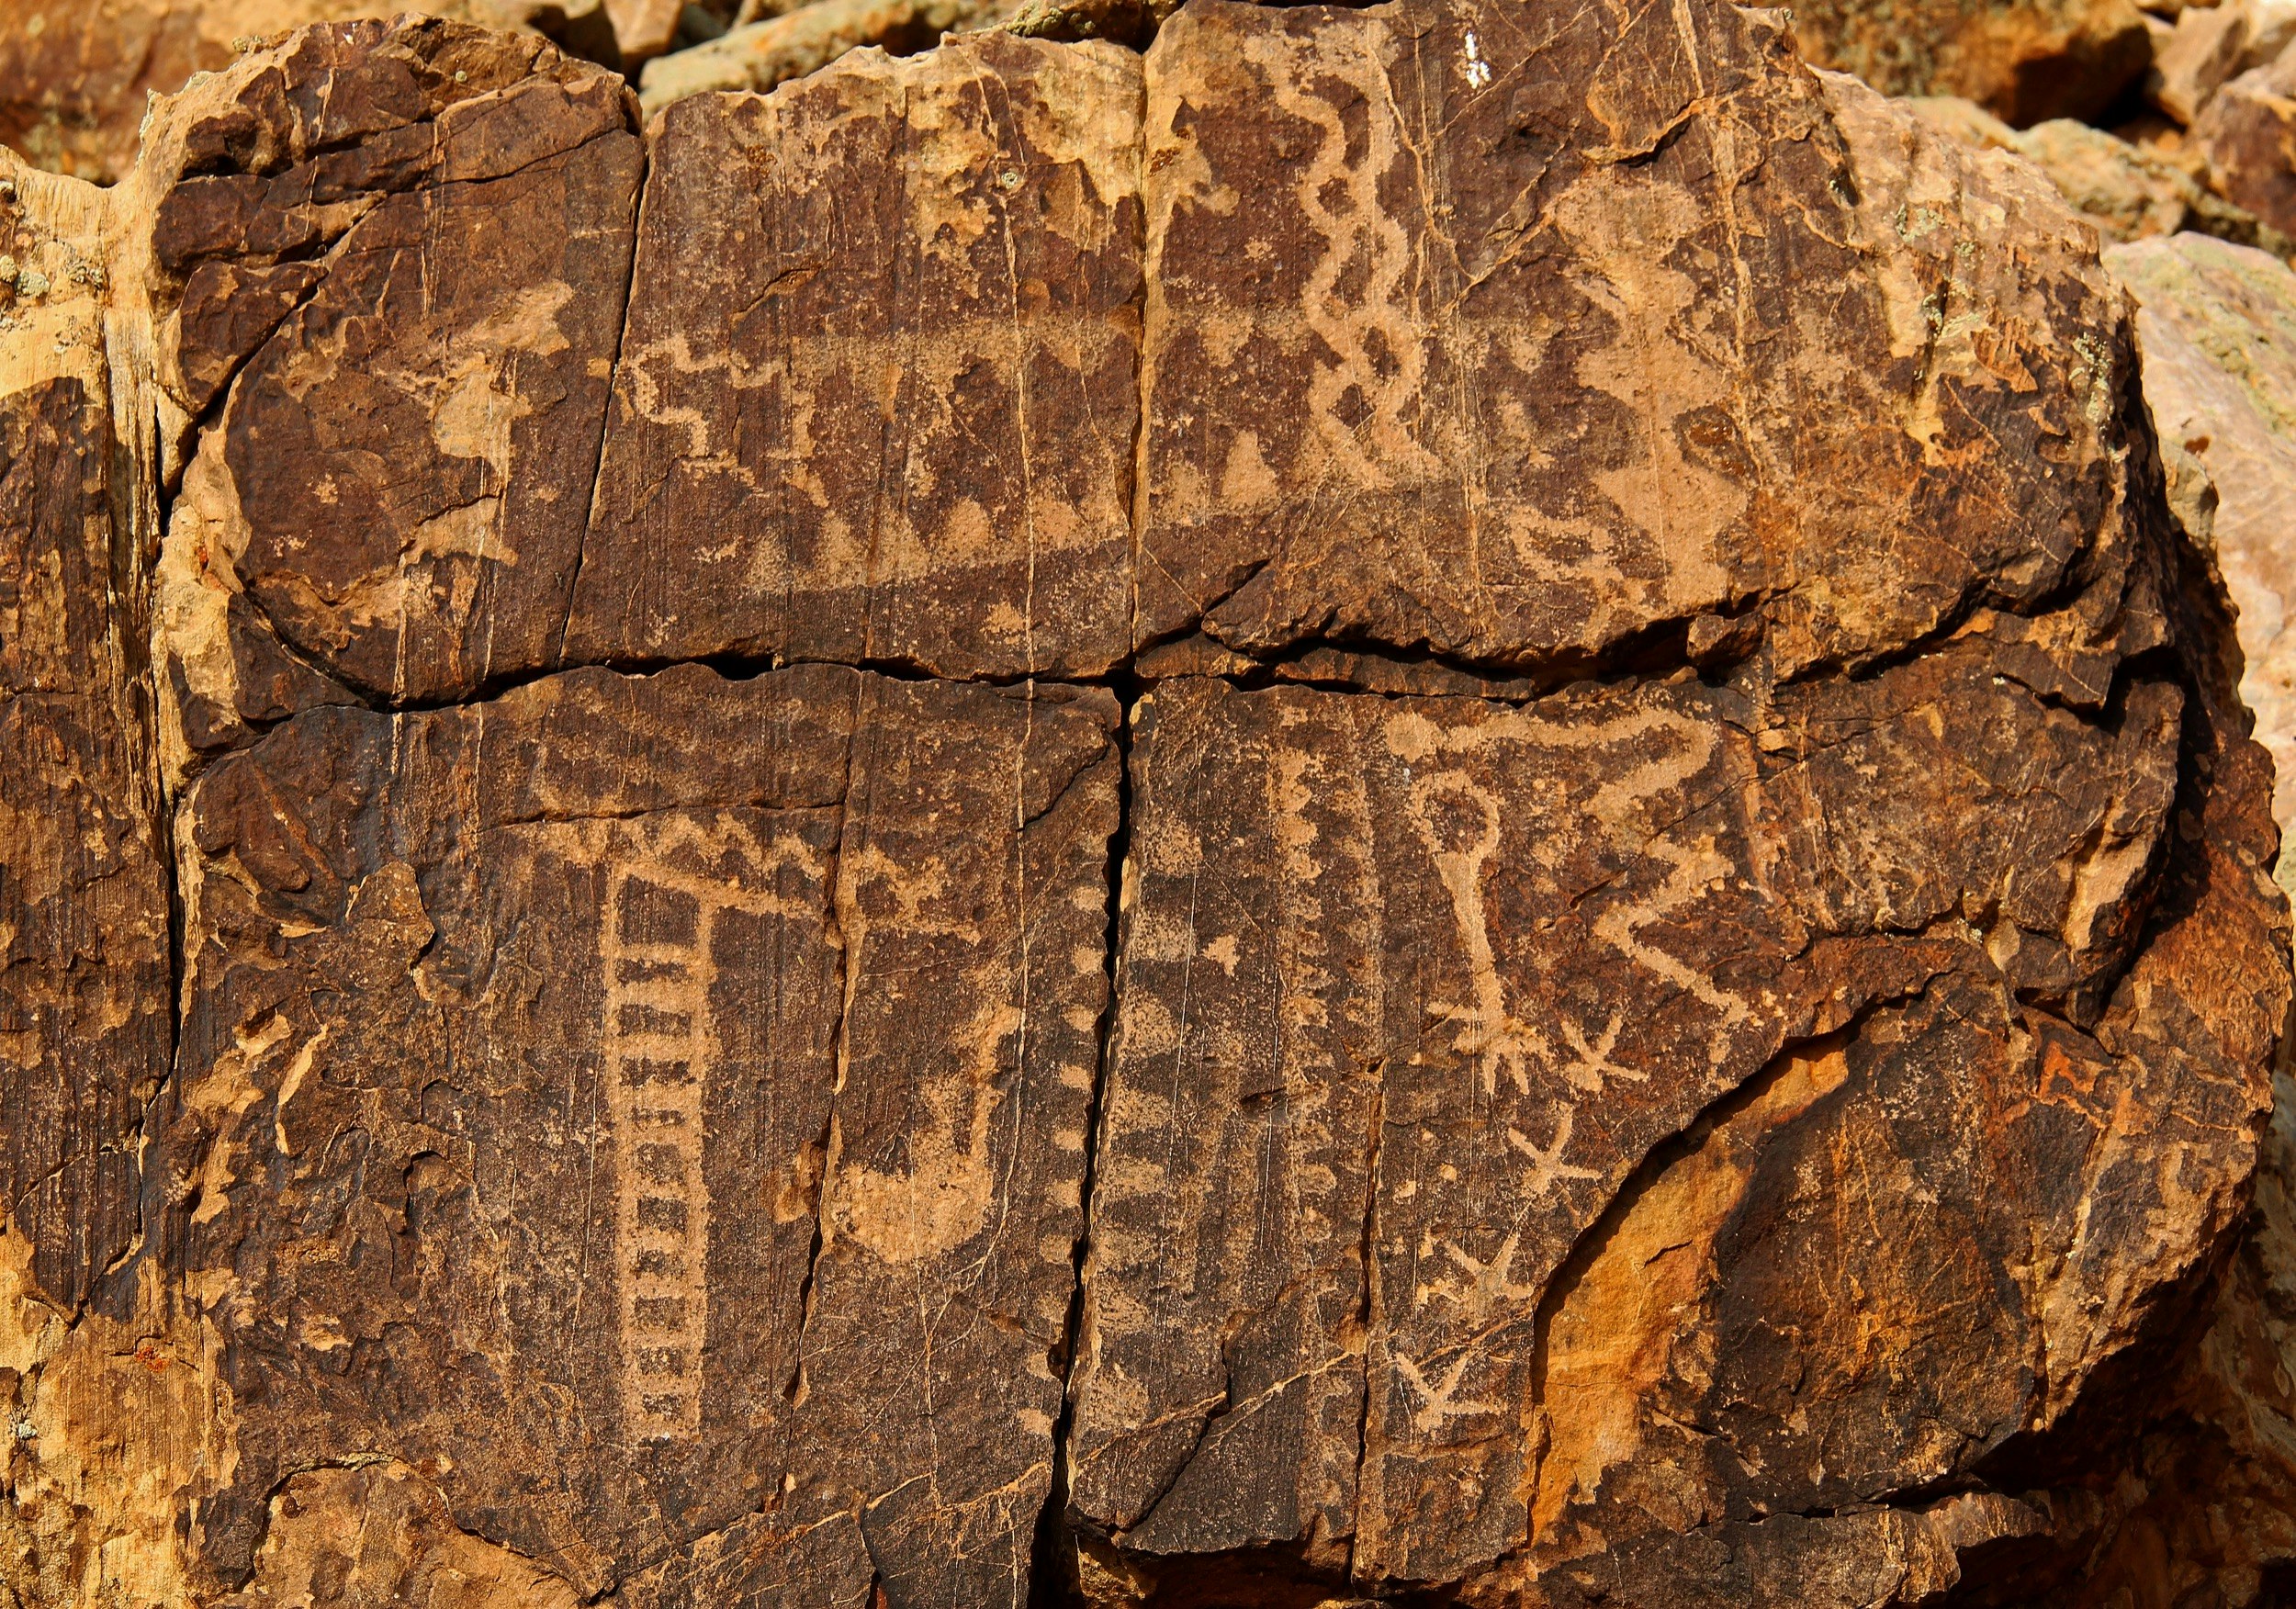 White etchings mark a dark brown stone at Parowan, in Arizona